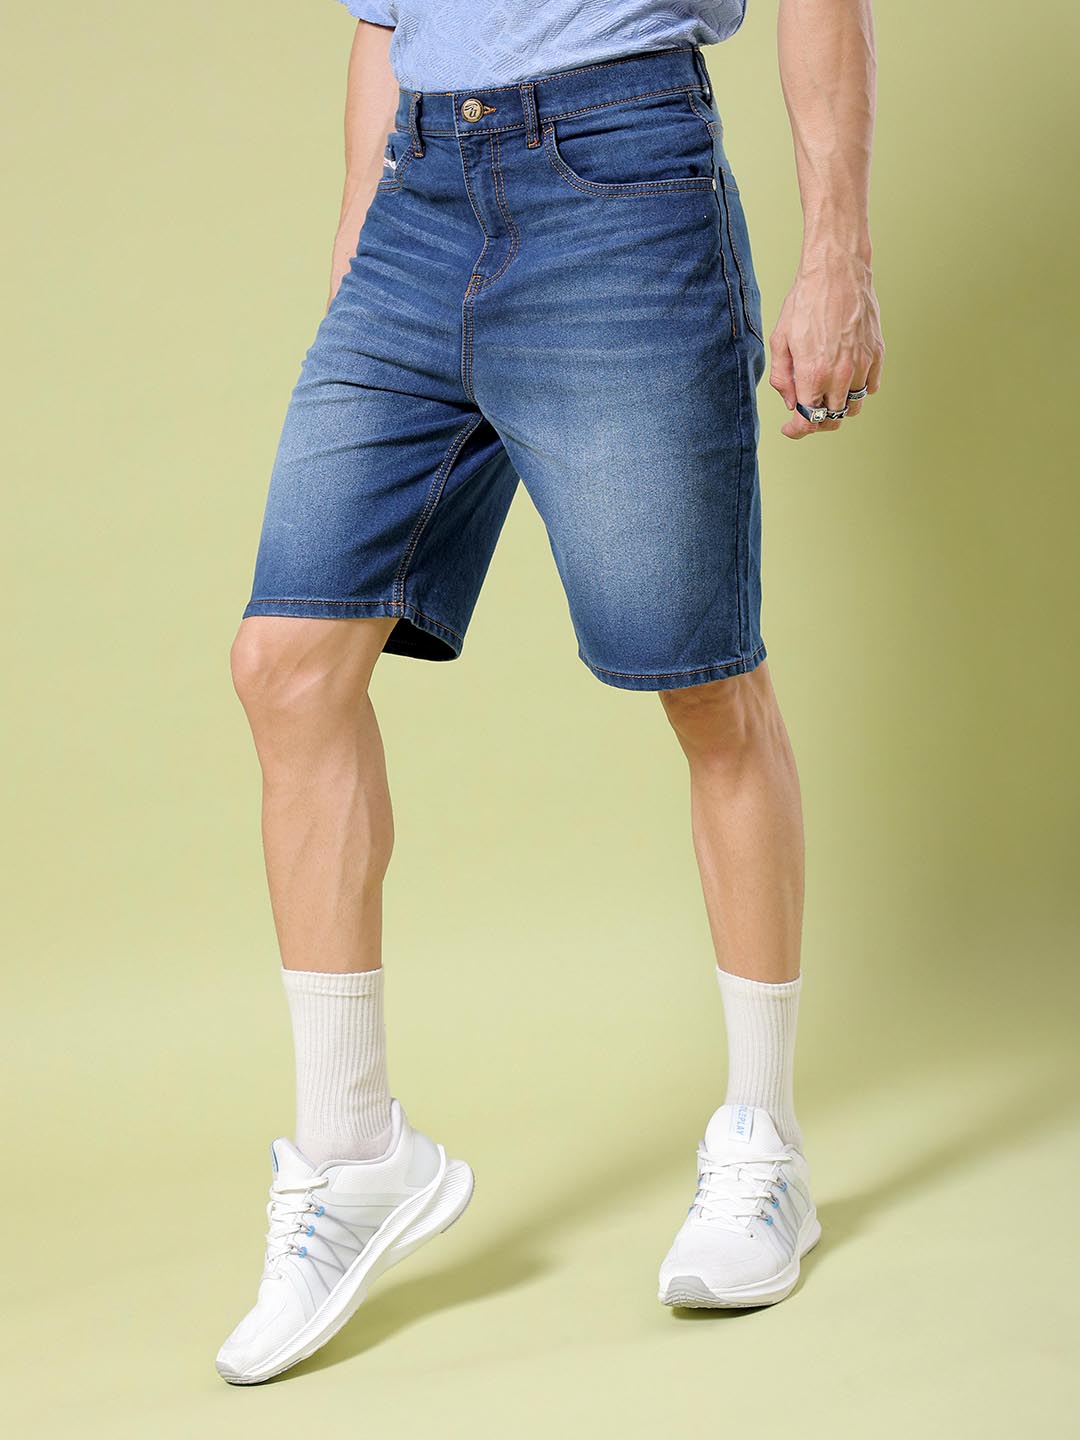 Shop Men Solid Shorts Online.